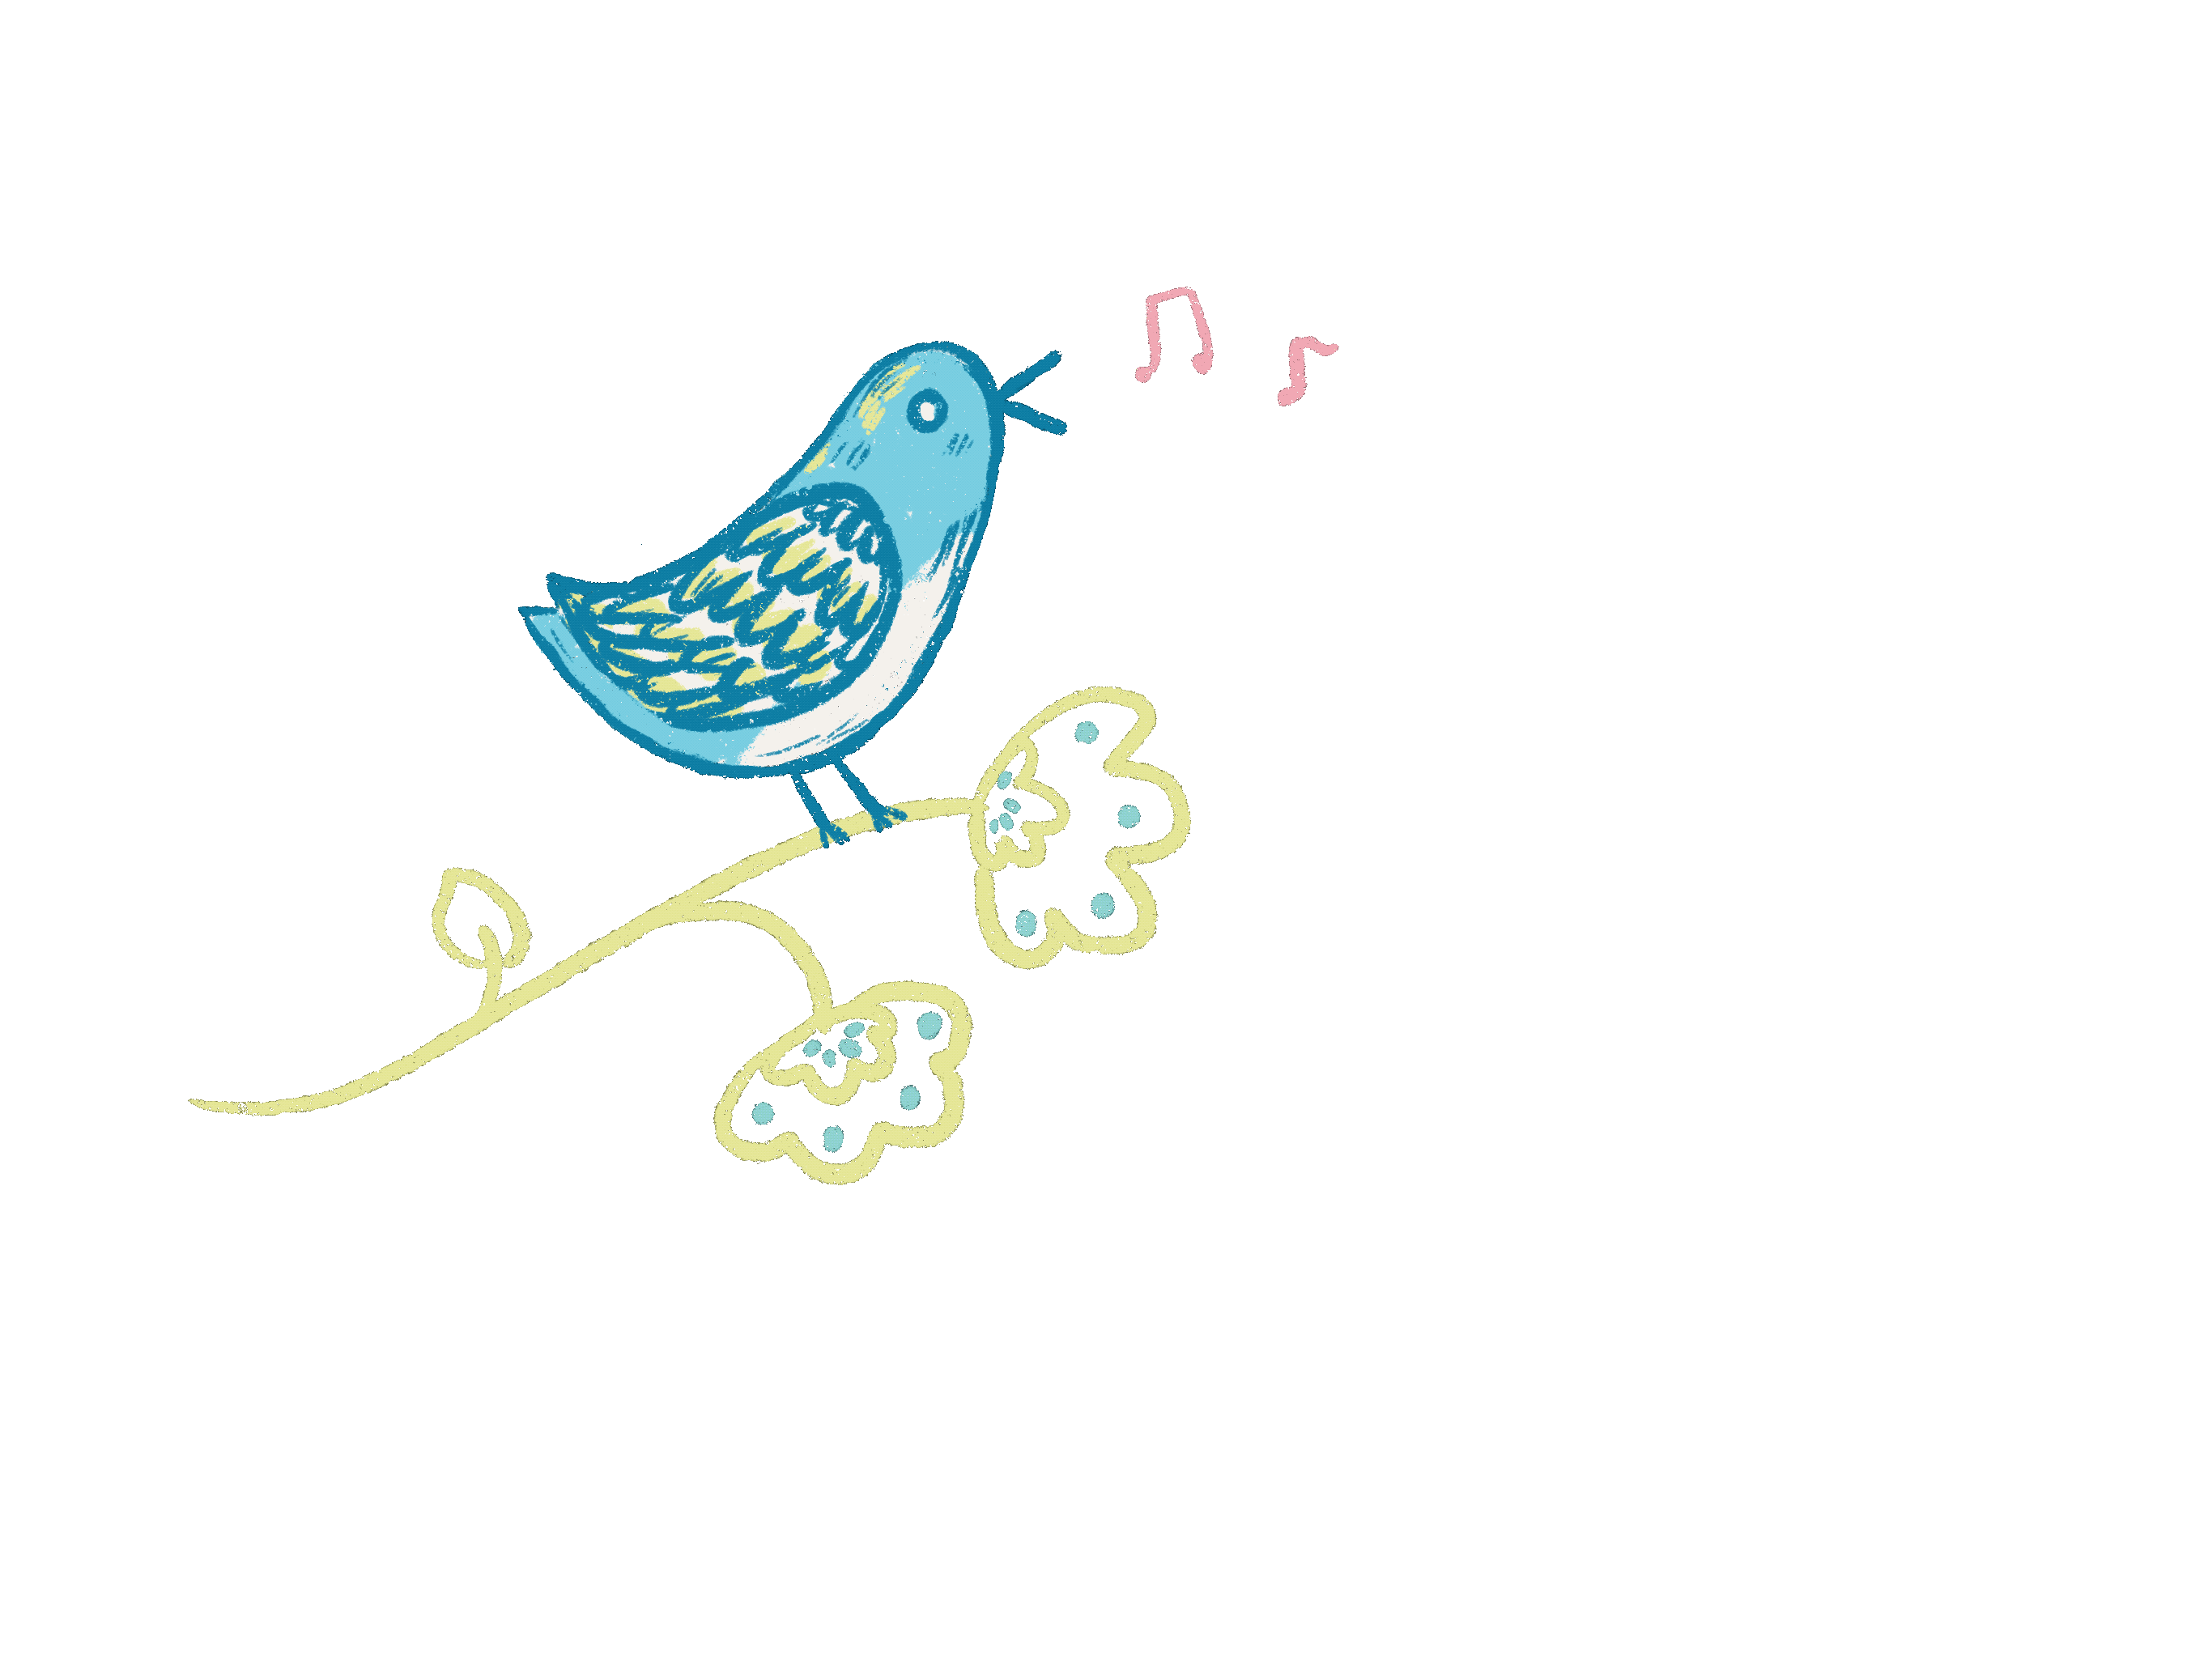 songbird